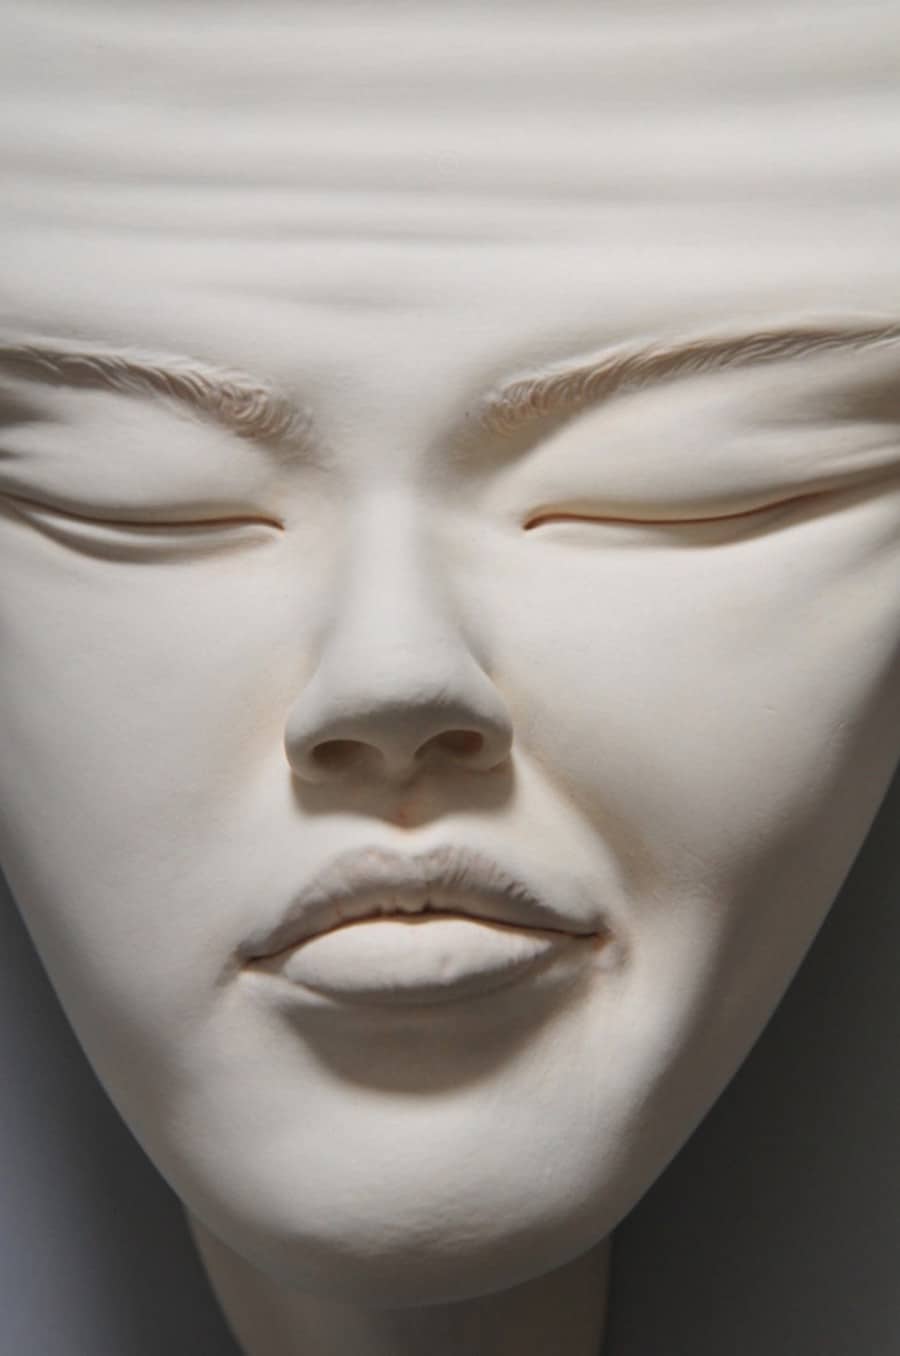 johnson tsang surreal sculpture in porcelain